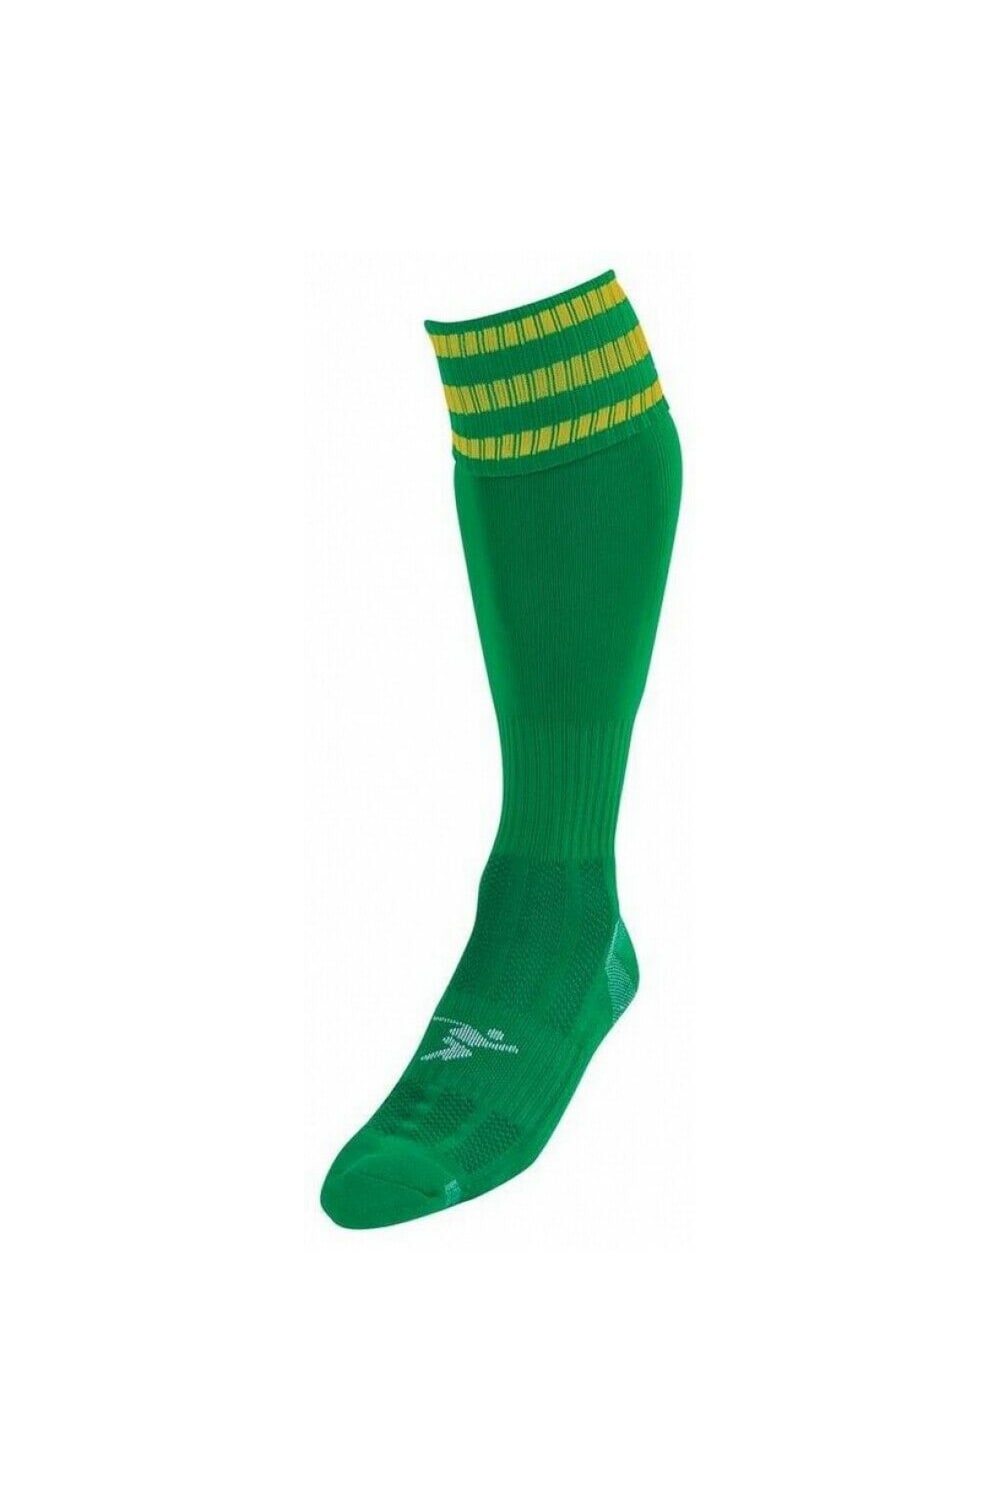 Precision Childrens/Kids Pro Football Socks (Green/Gold)